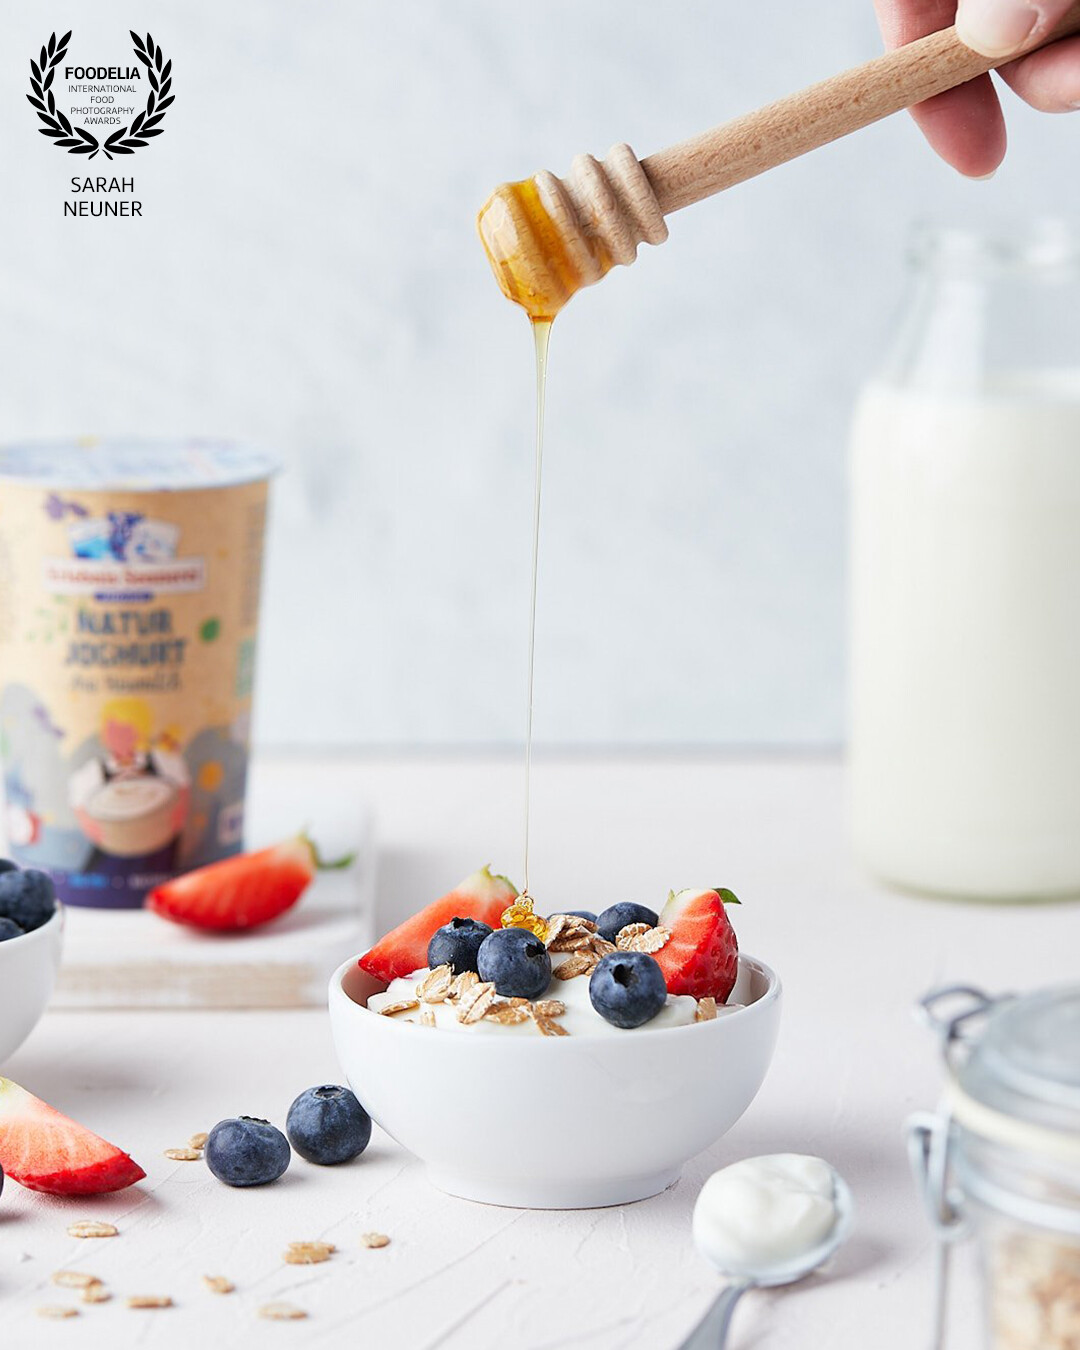 Product shot in a breakfast inspired scene showcasing the yoghurt from Austrian based brand Erlebnis Sennerei.